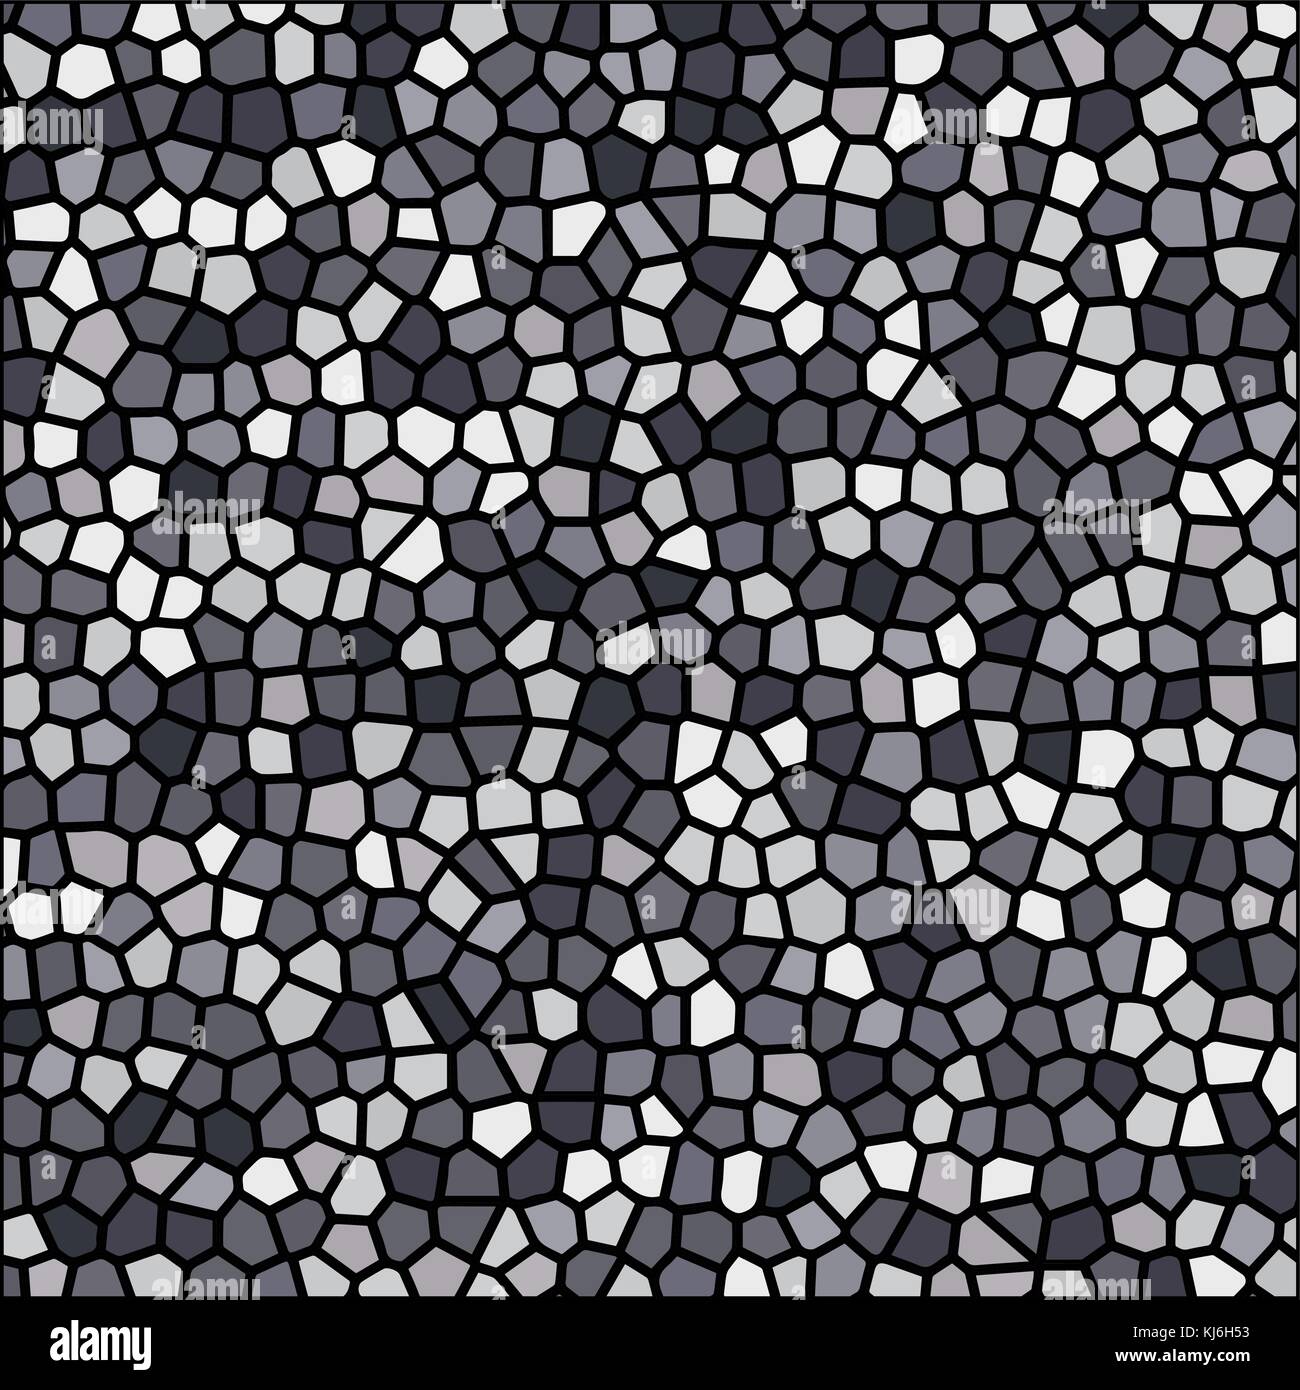 stone pebble texture mosaic vector background wallpaper Stock Vector